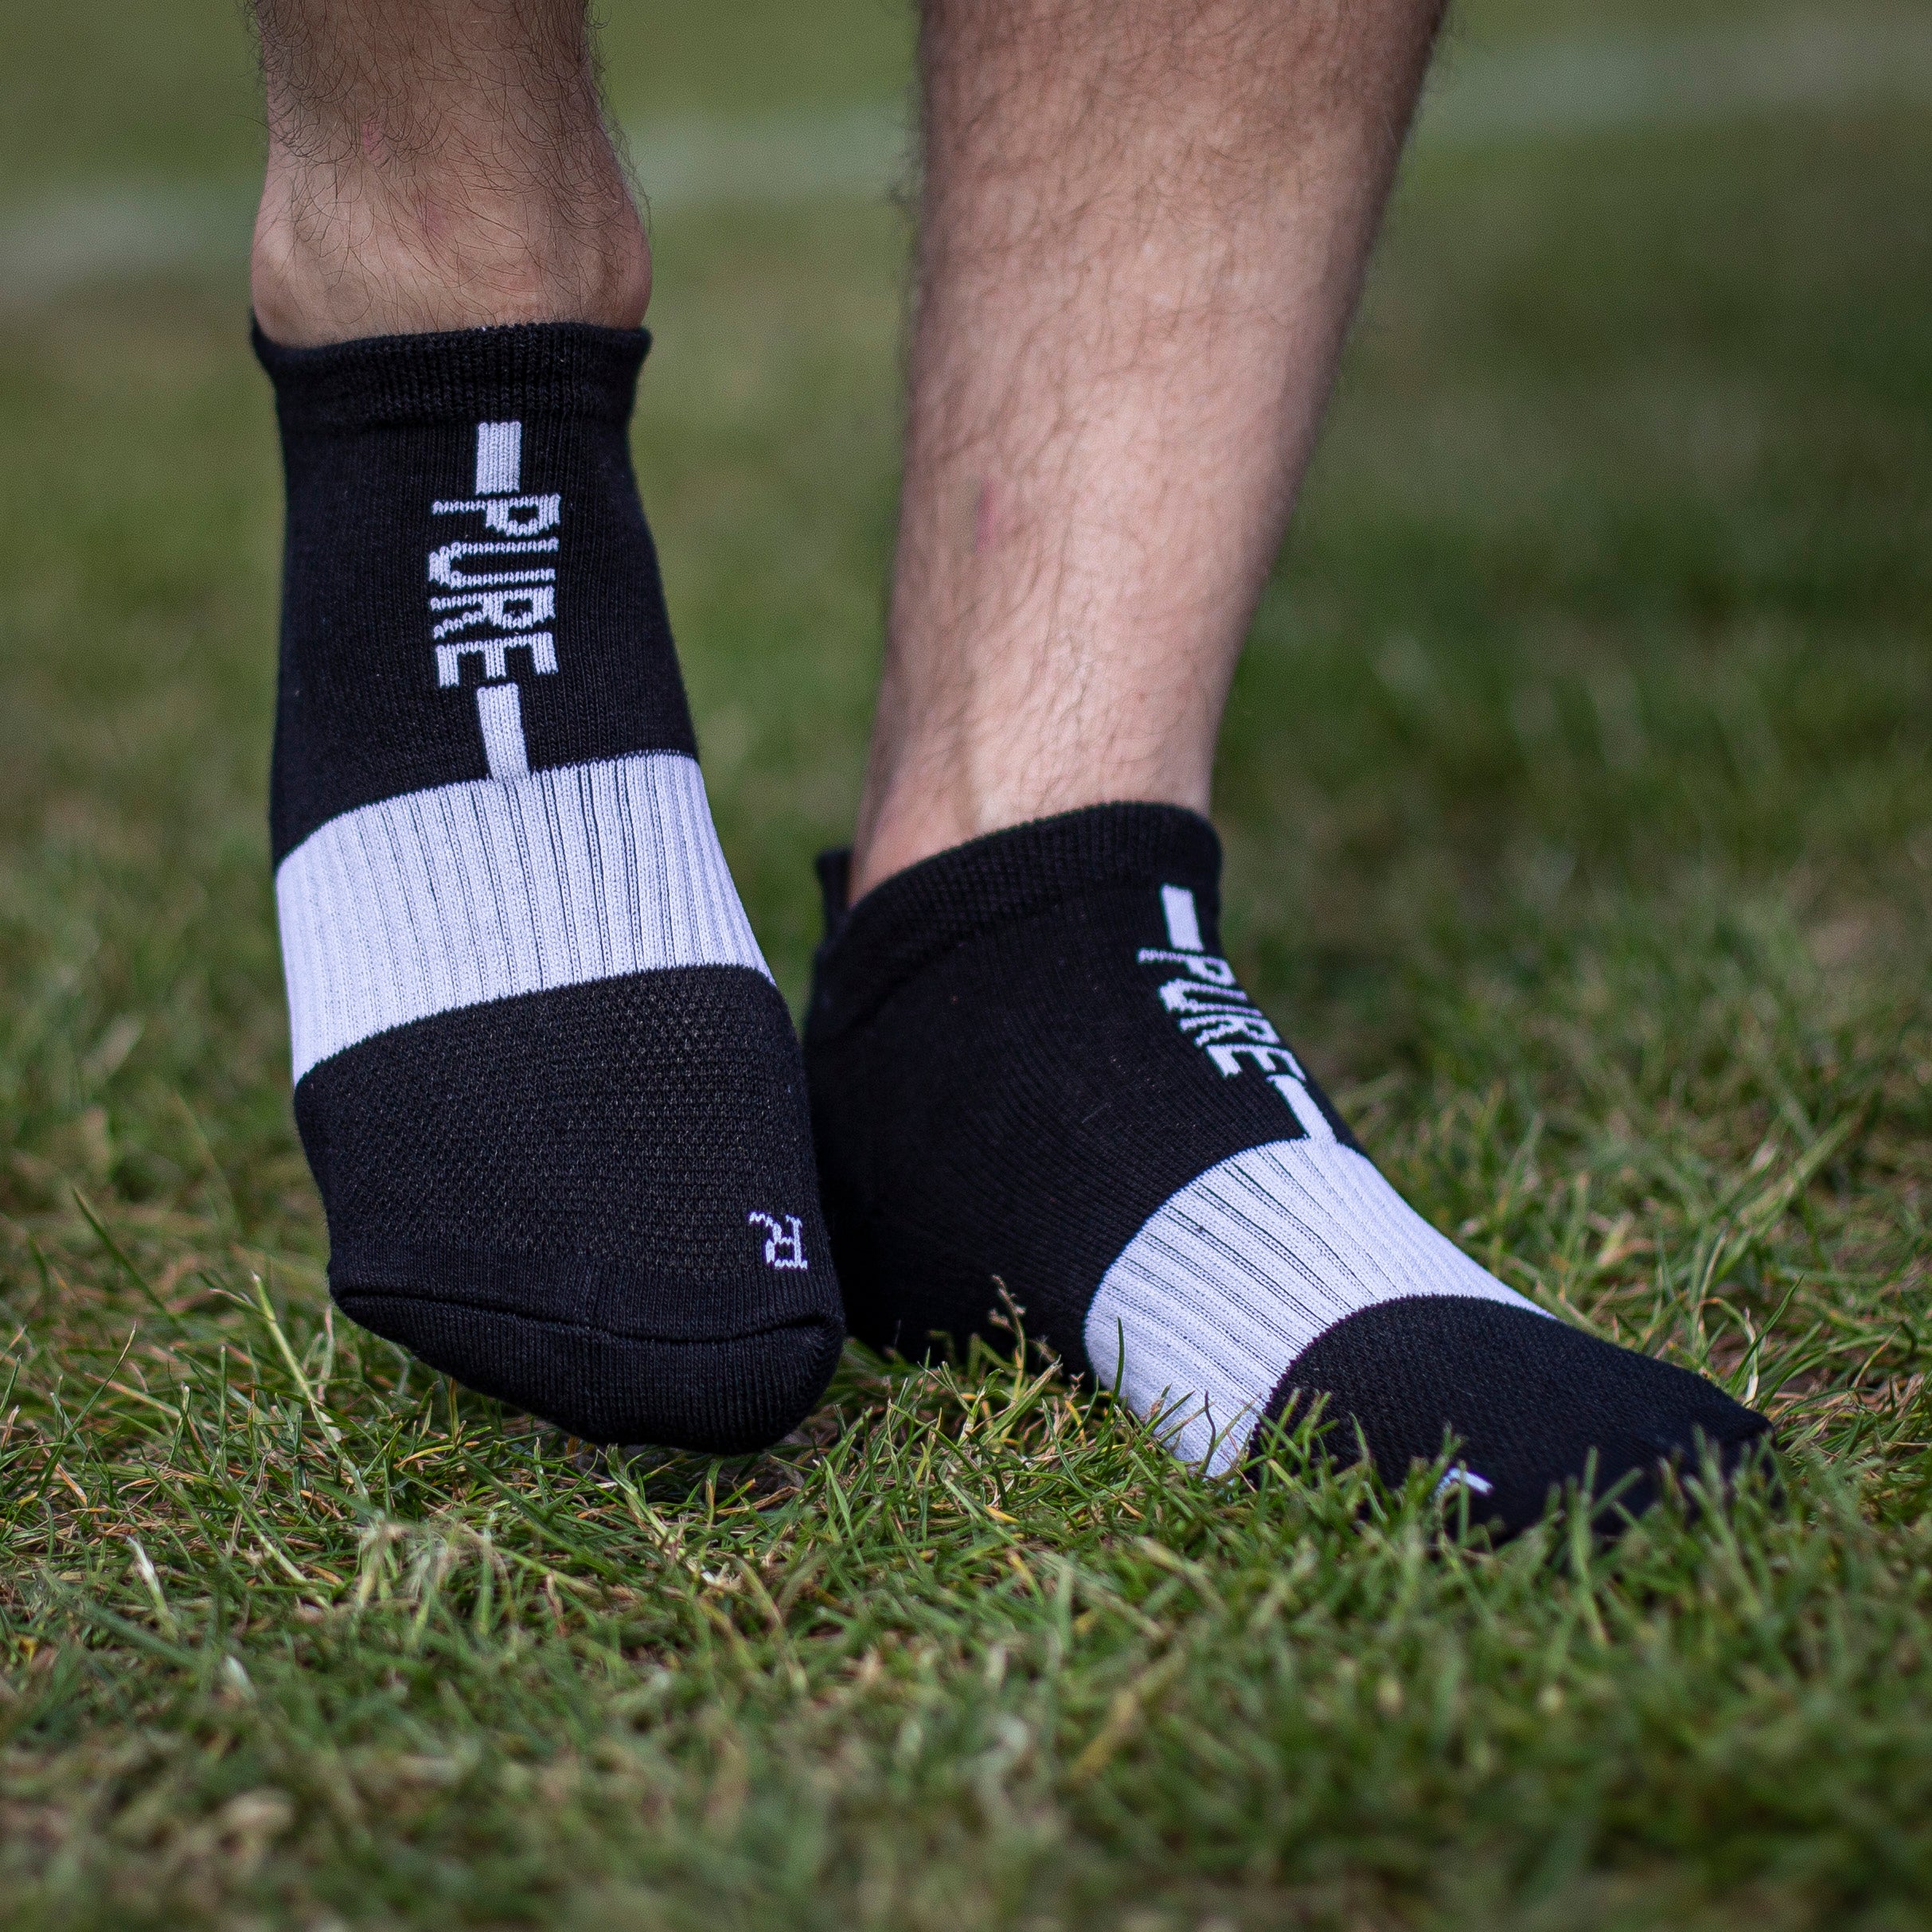 Pure Grip Socks Pro Ankle Cut Black